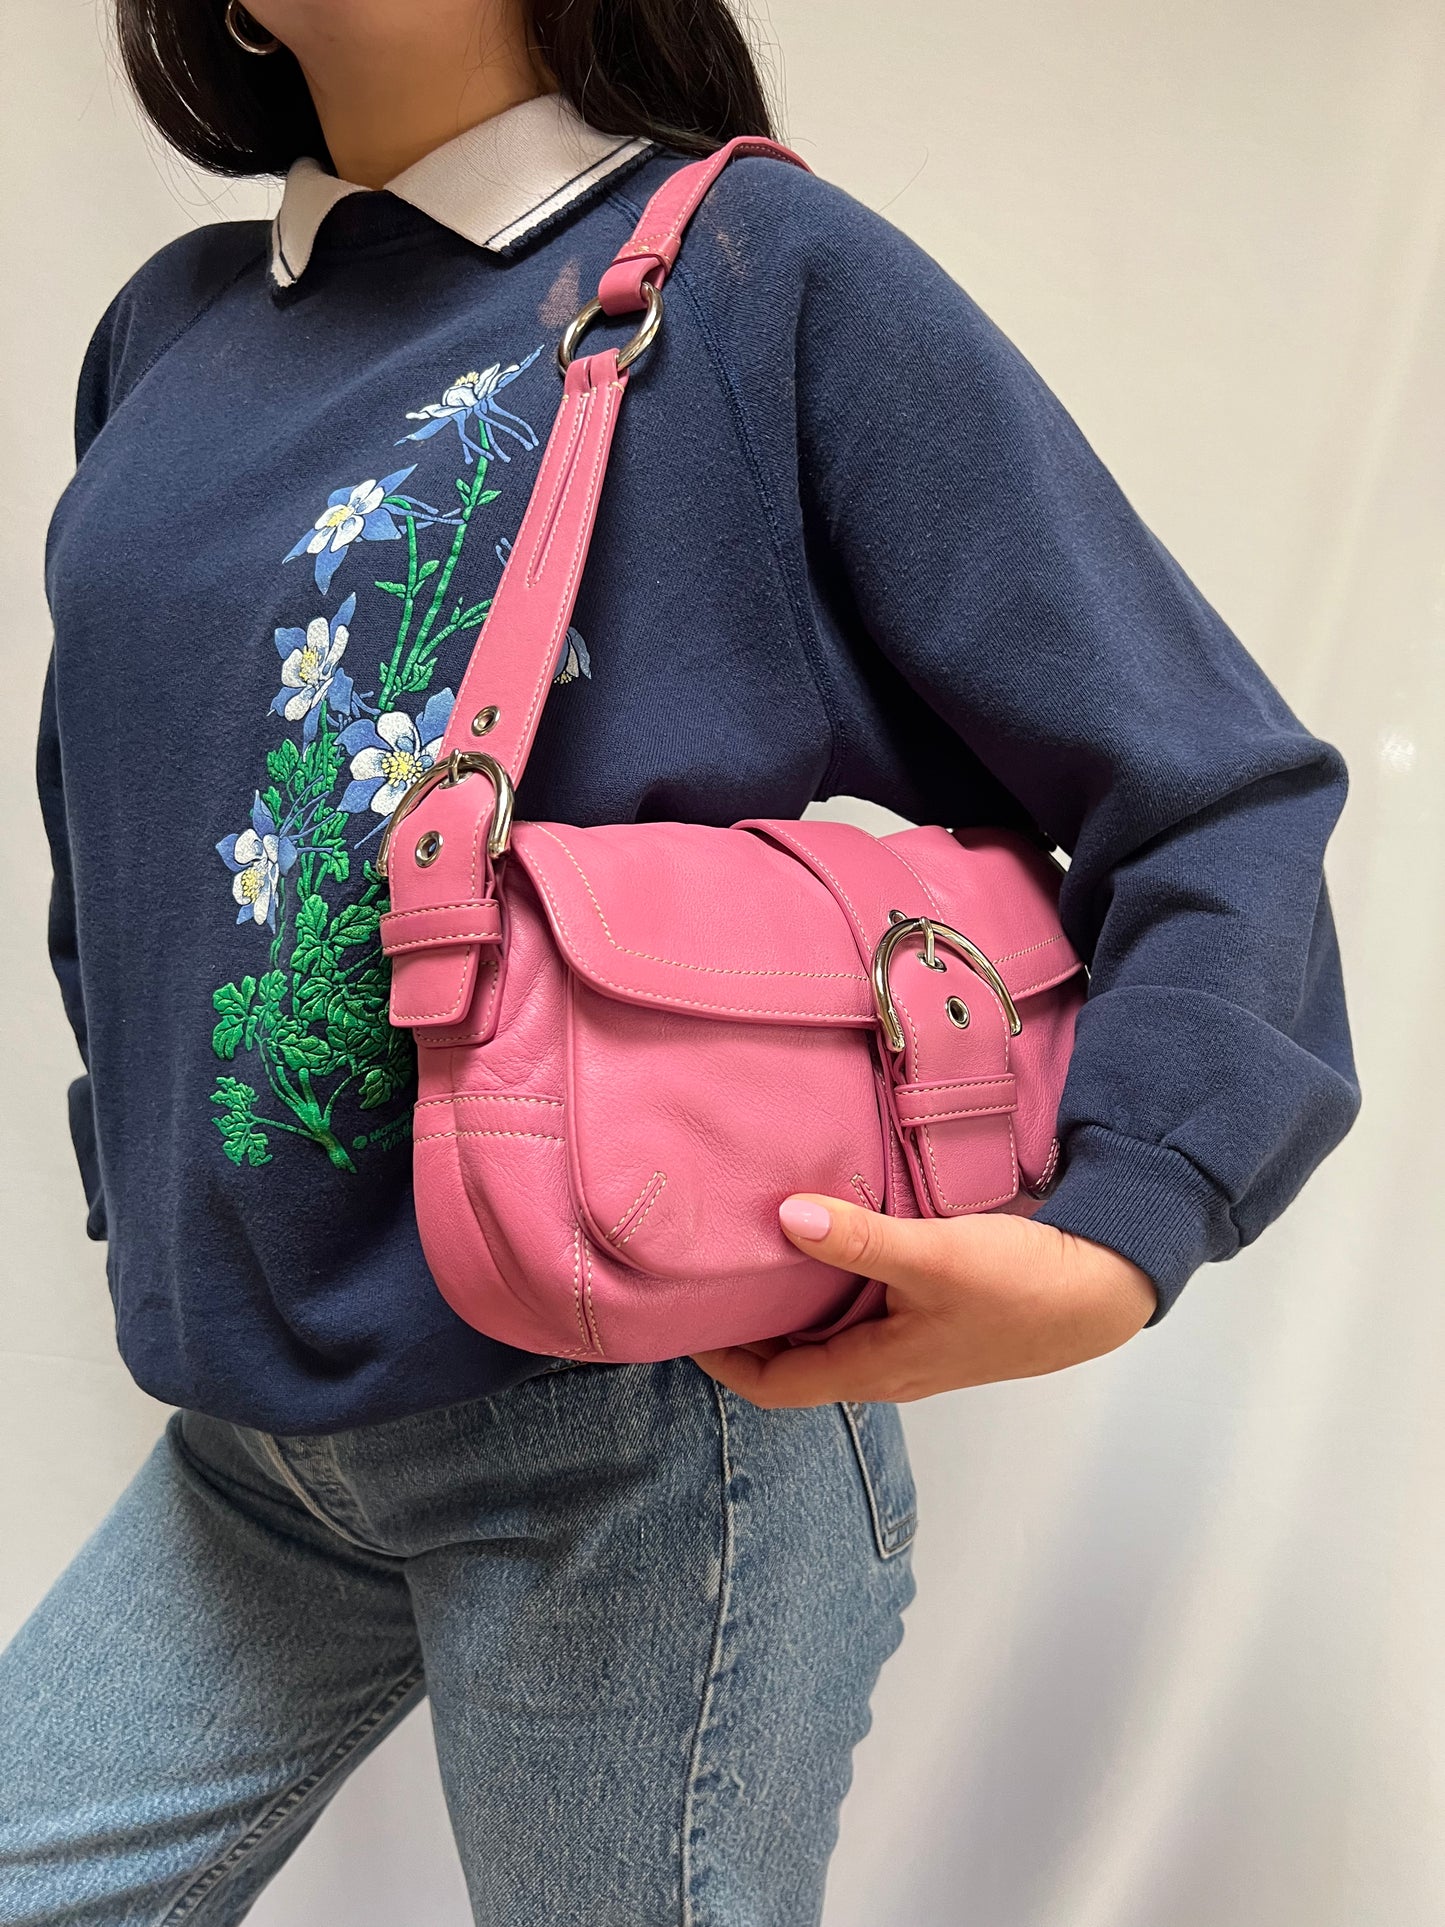 '05 COACH Leather Handbag - Pink